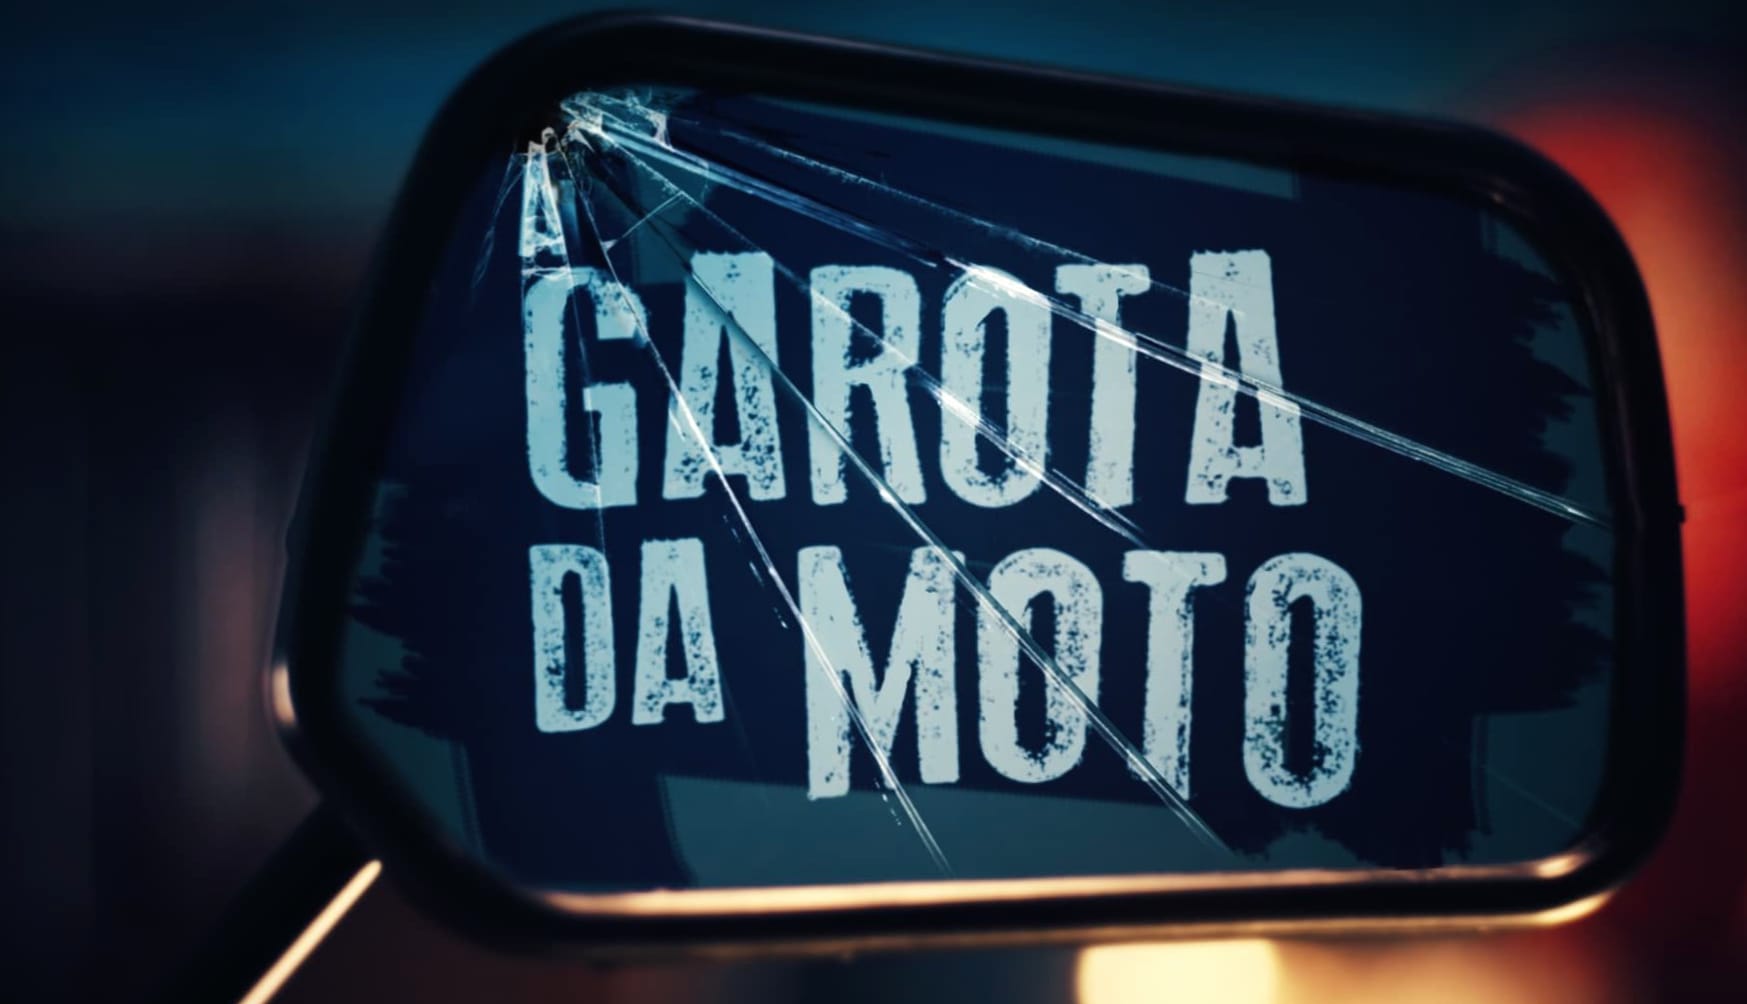 A Garota da Moto at 1600 x 1200 size wallpapers HD quality